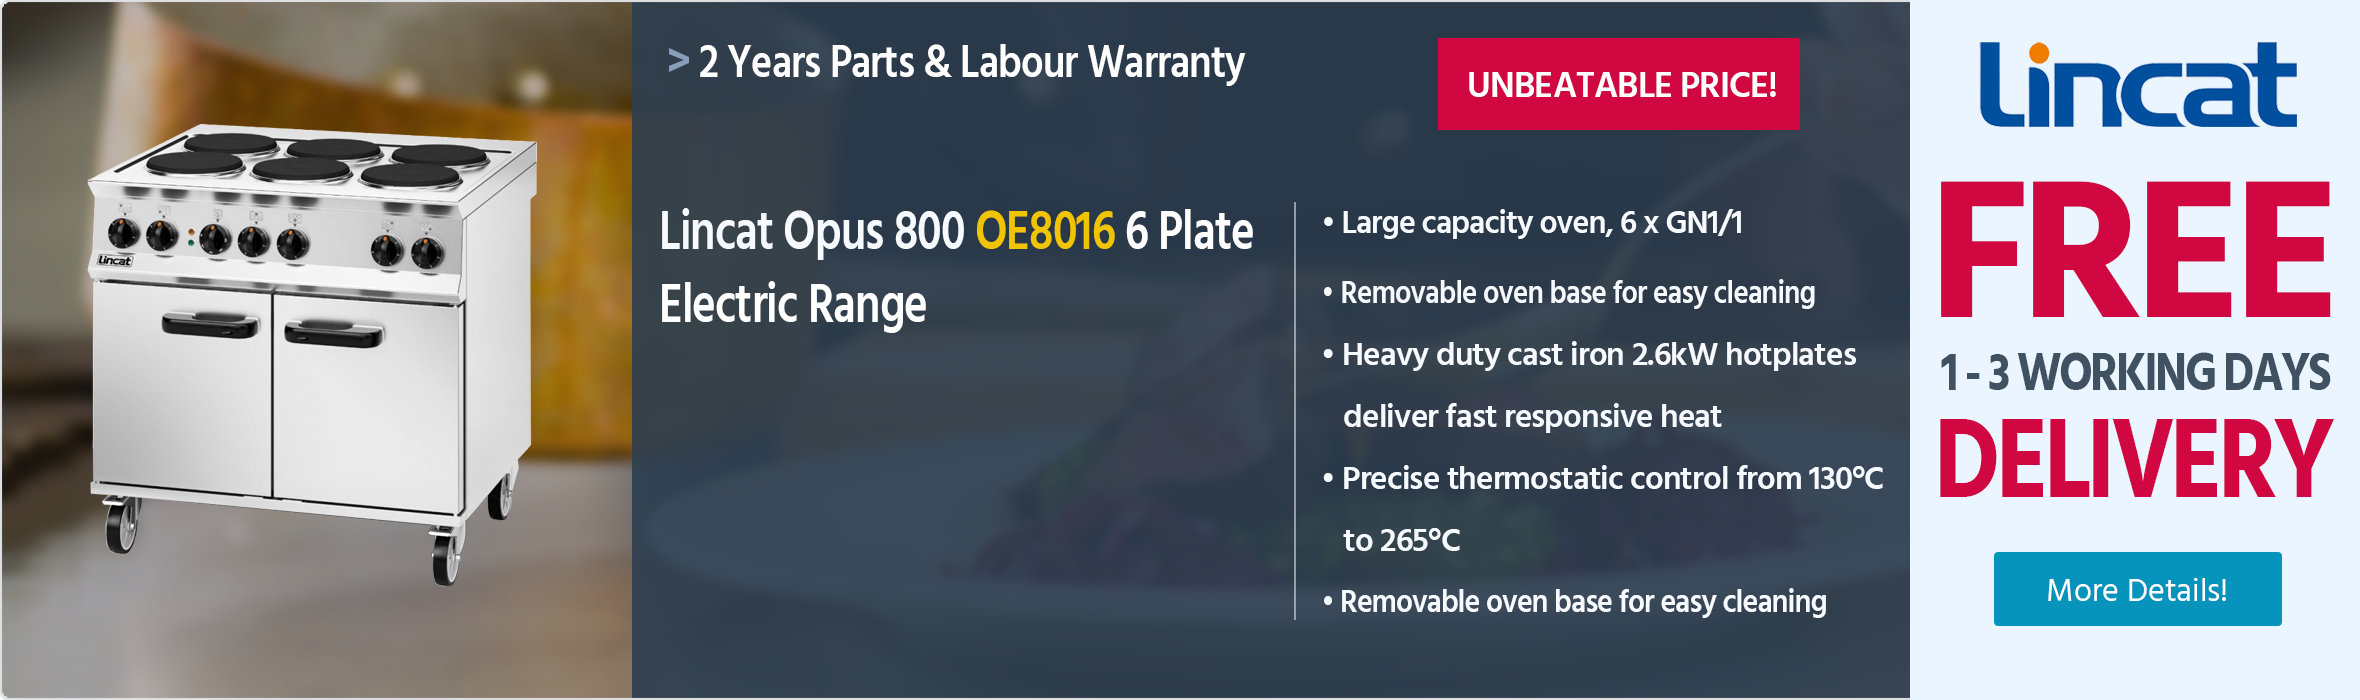 Lincat Opus 800 OE8016 6 Plate Electric Range (Round Hotplates)